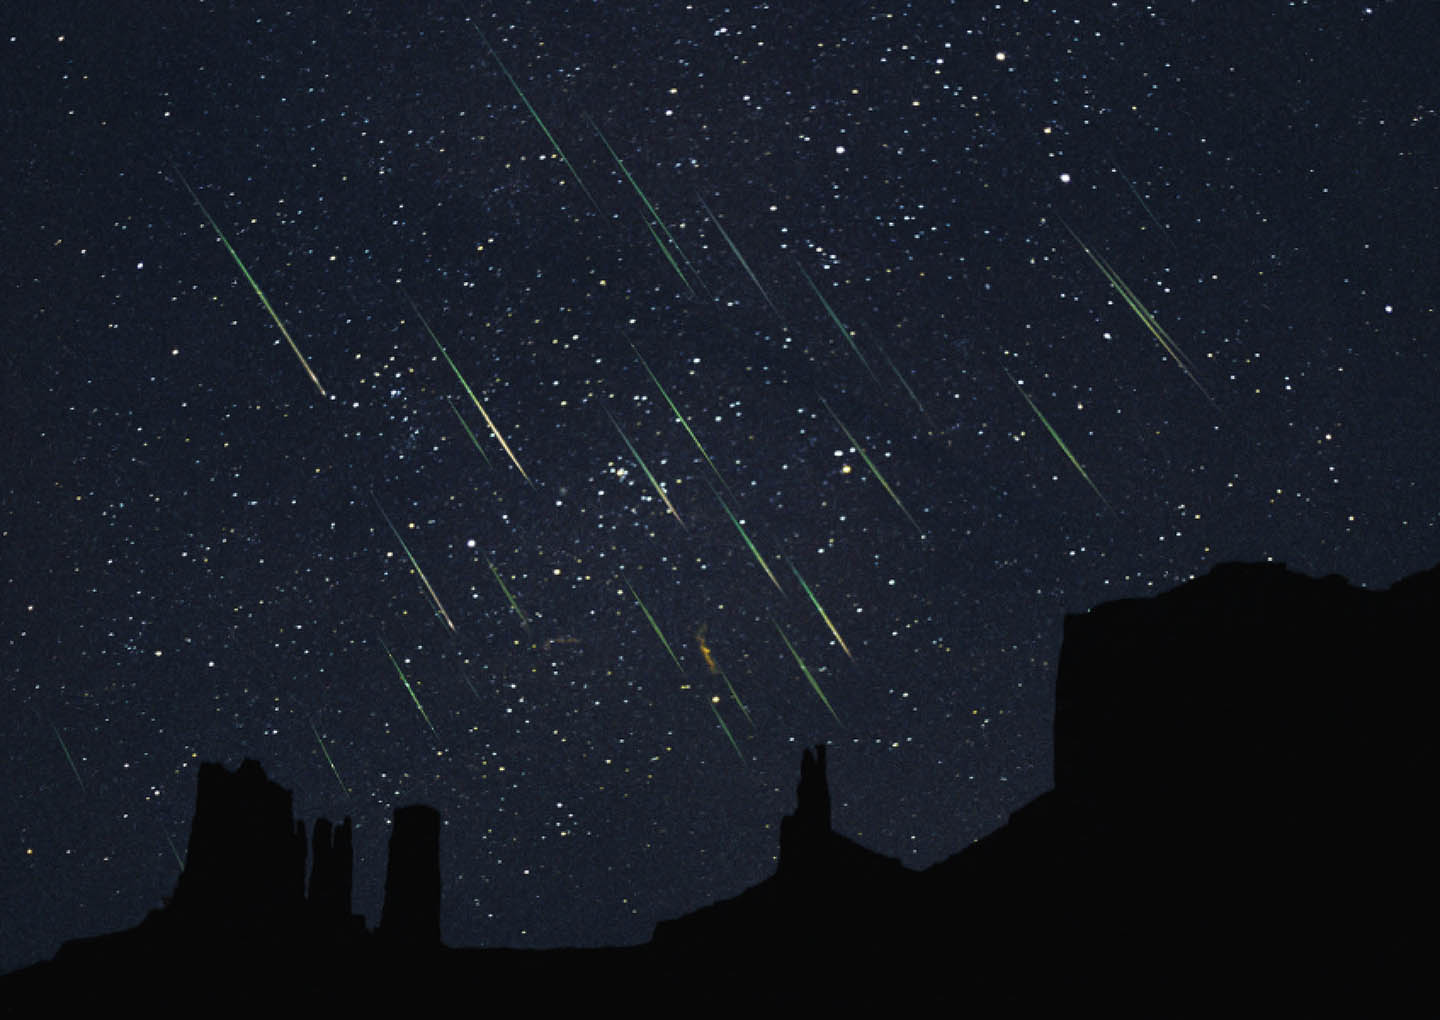 leonid meteor shower #1